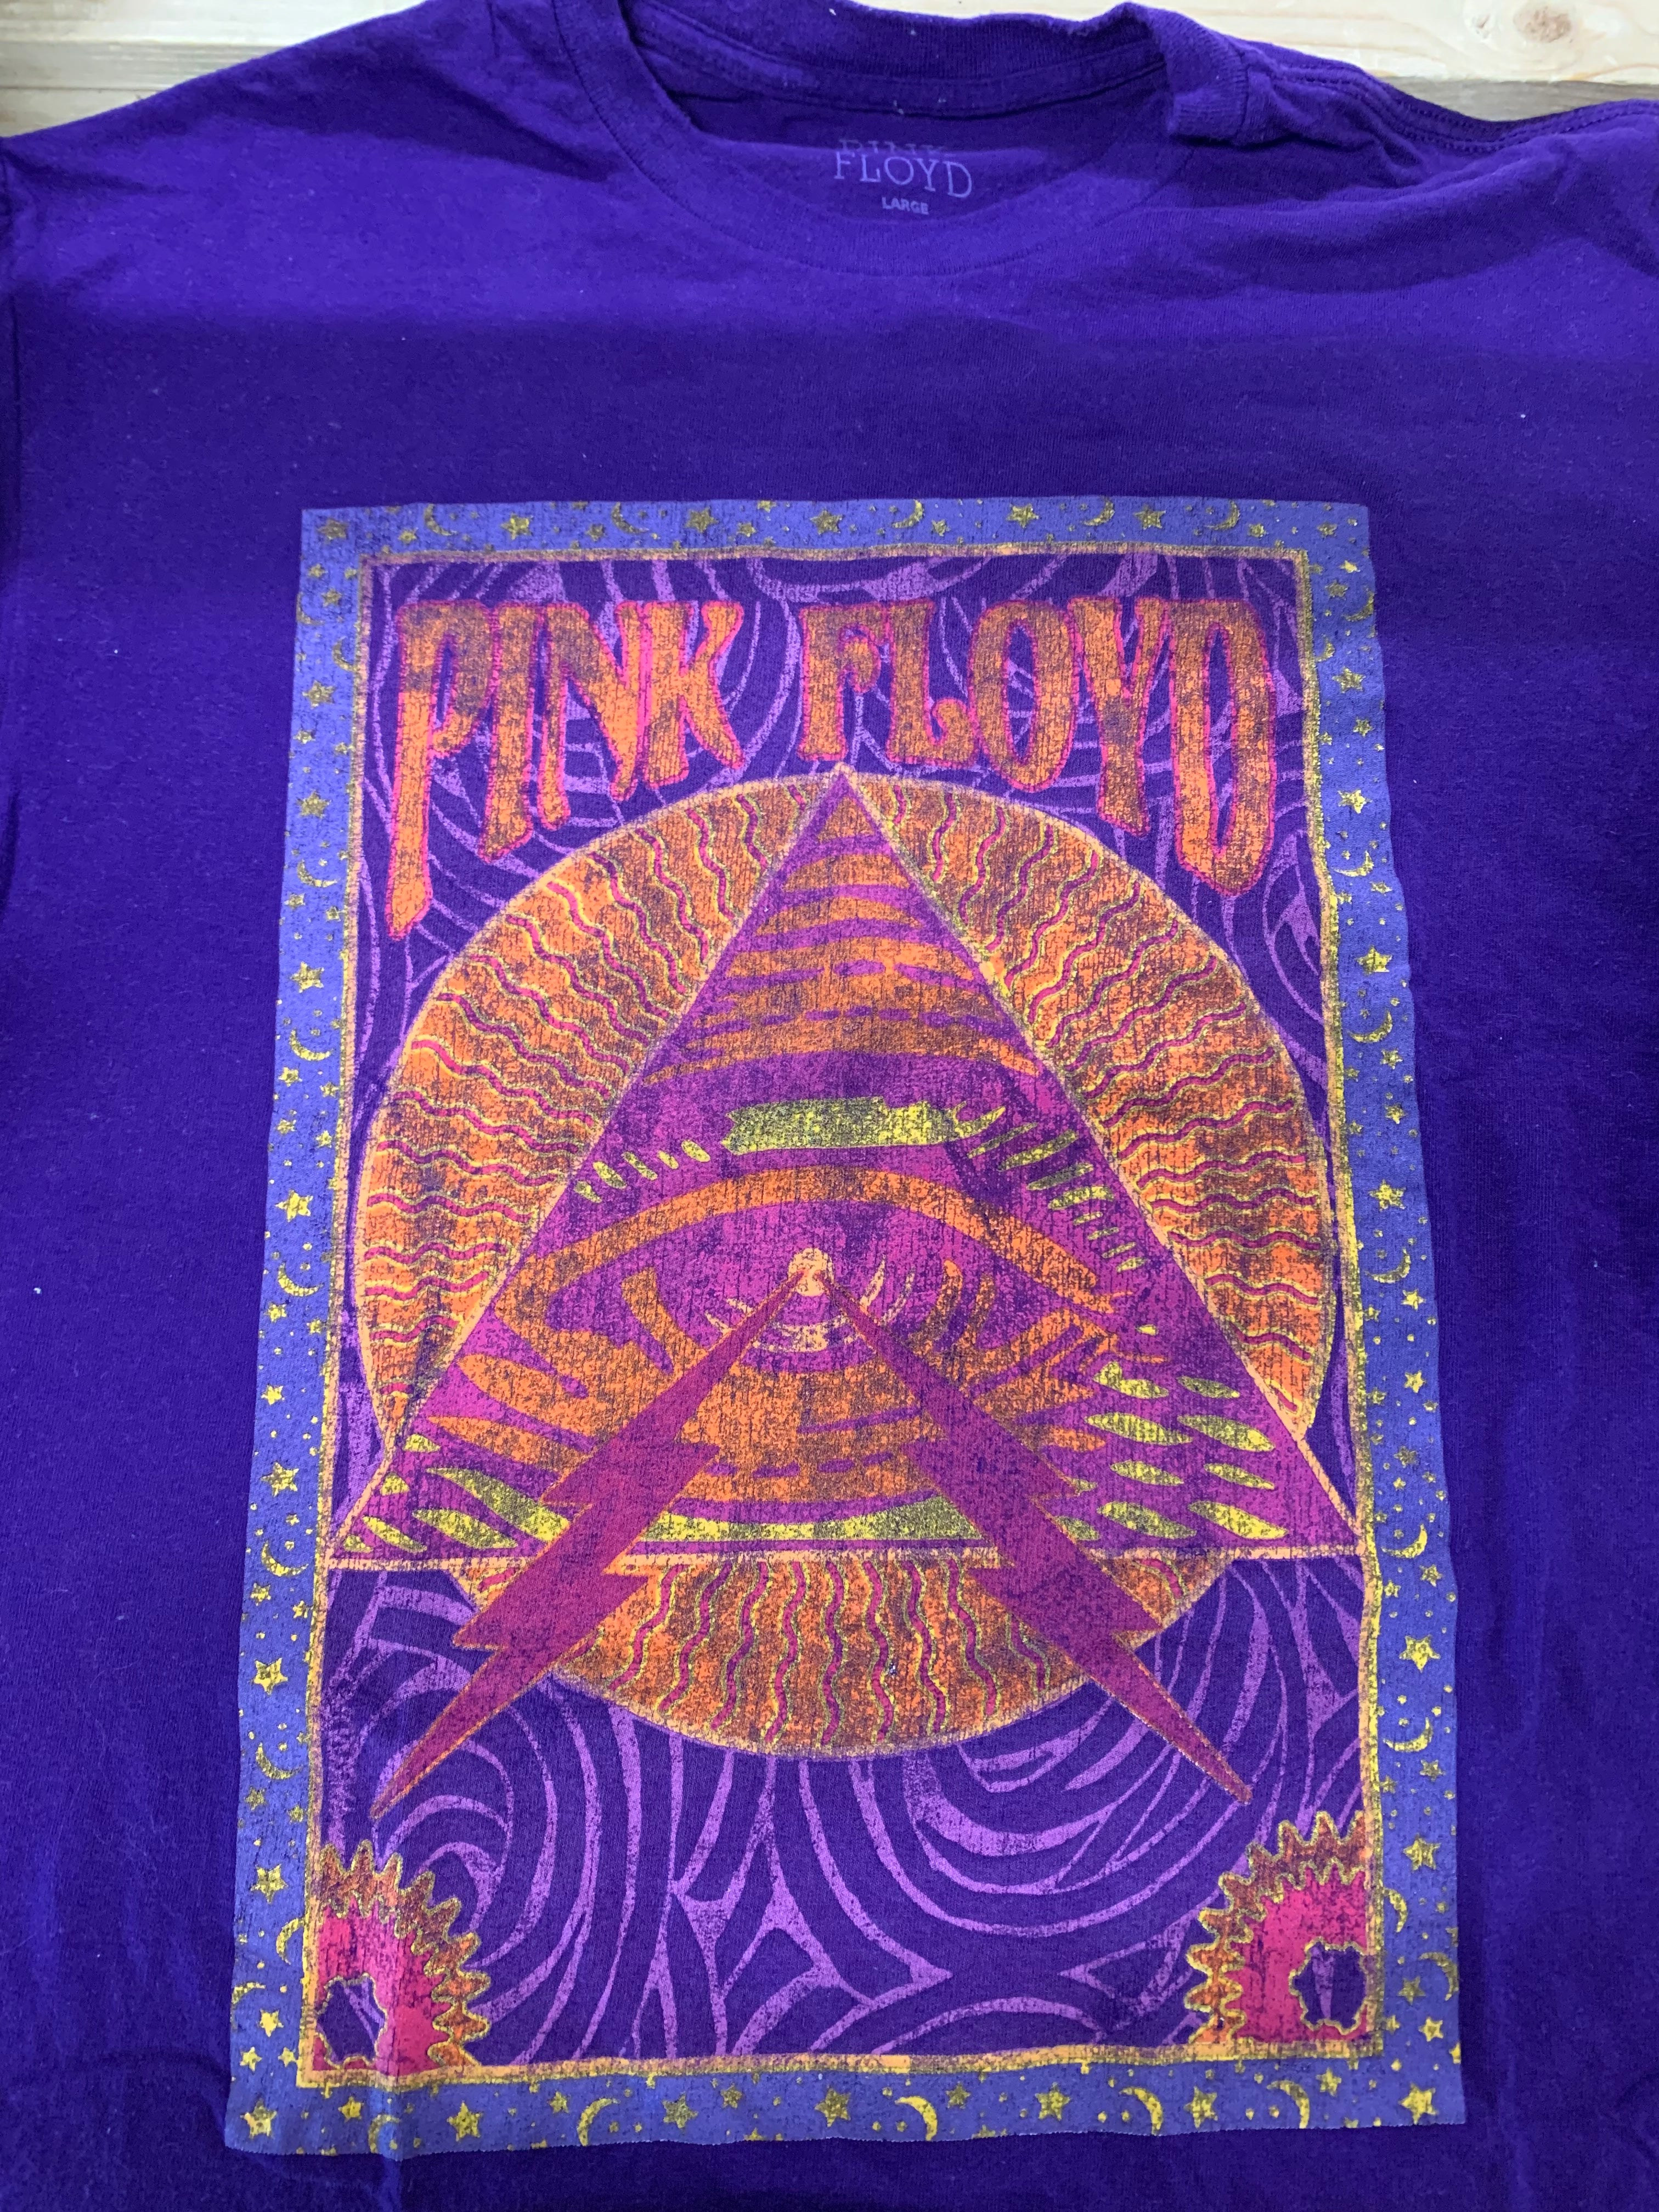 Pink Floyd Psychedelic Tarot T-Shirt, Purple, L